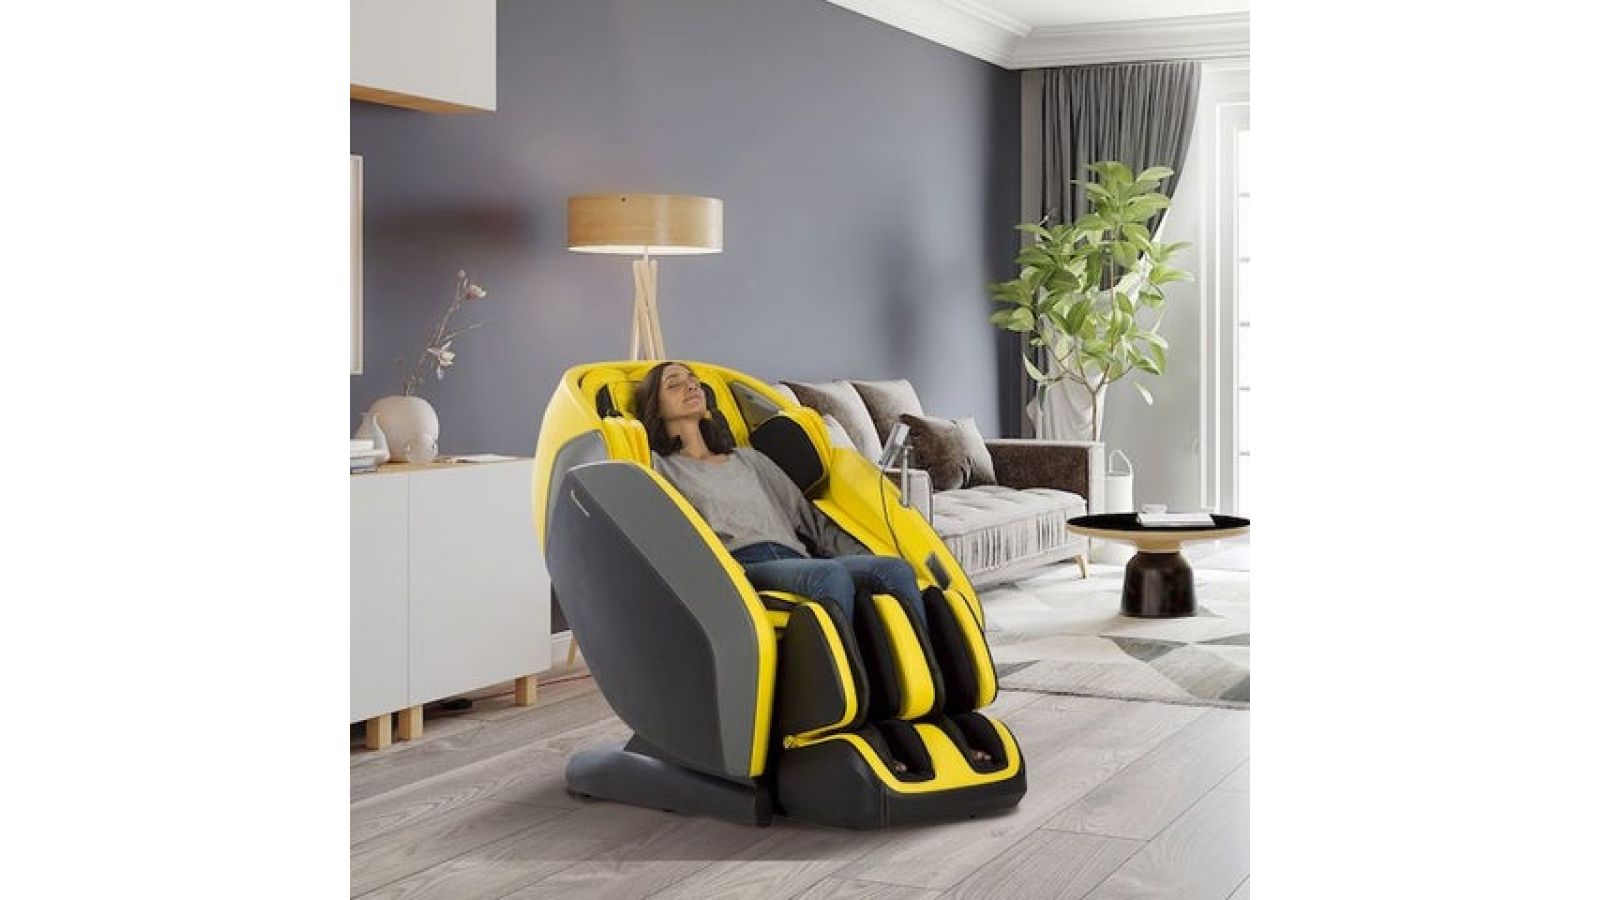 Certus Massage Chair